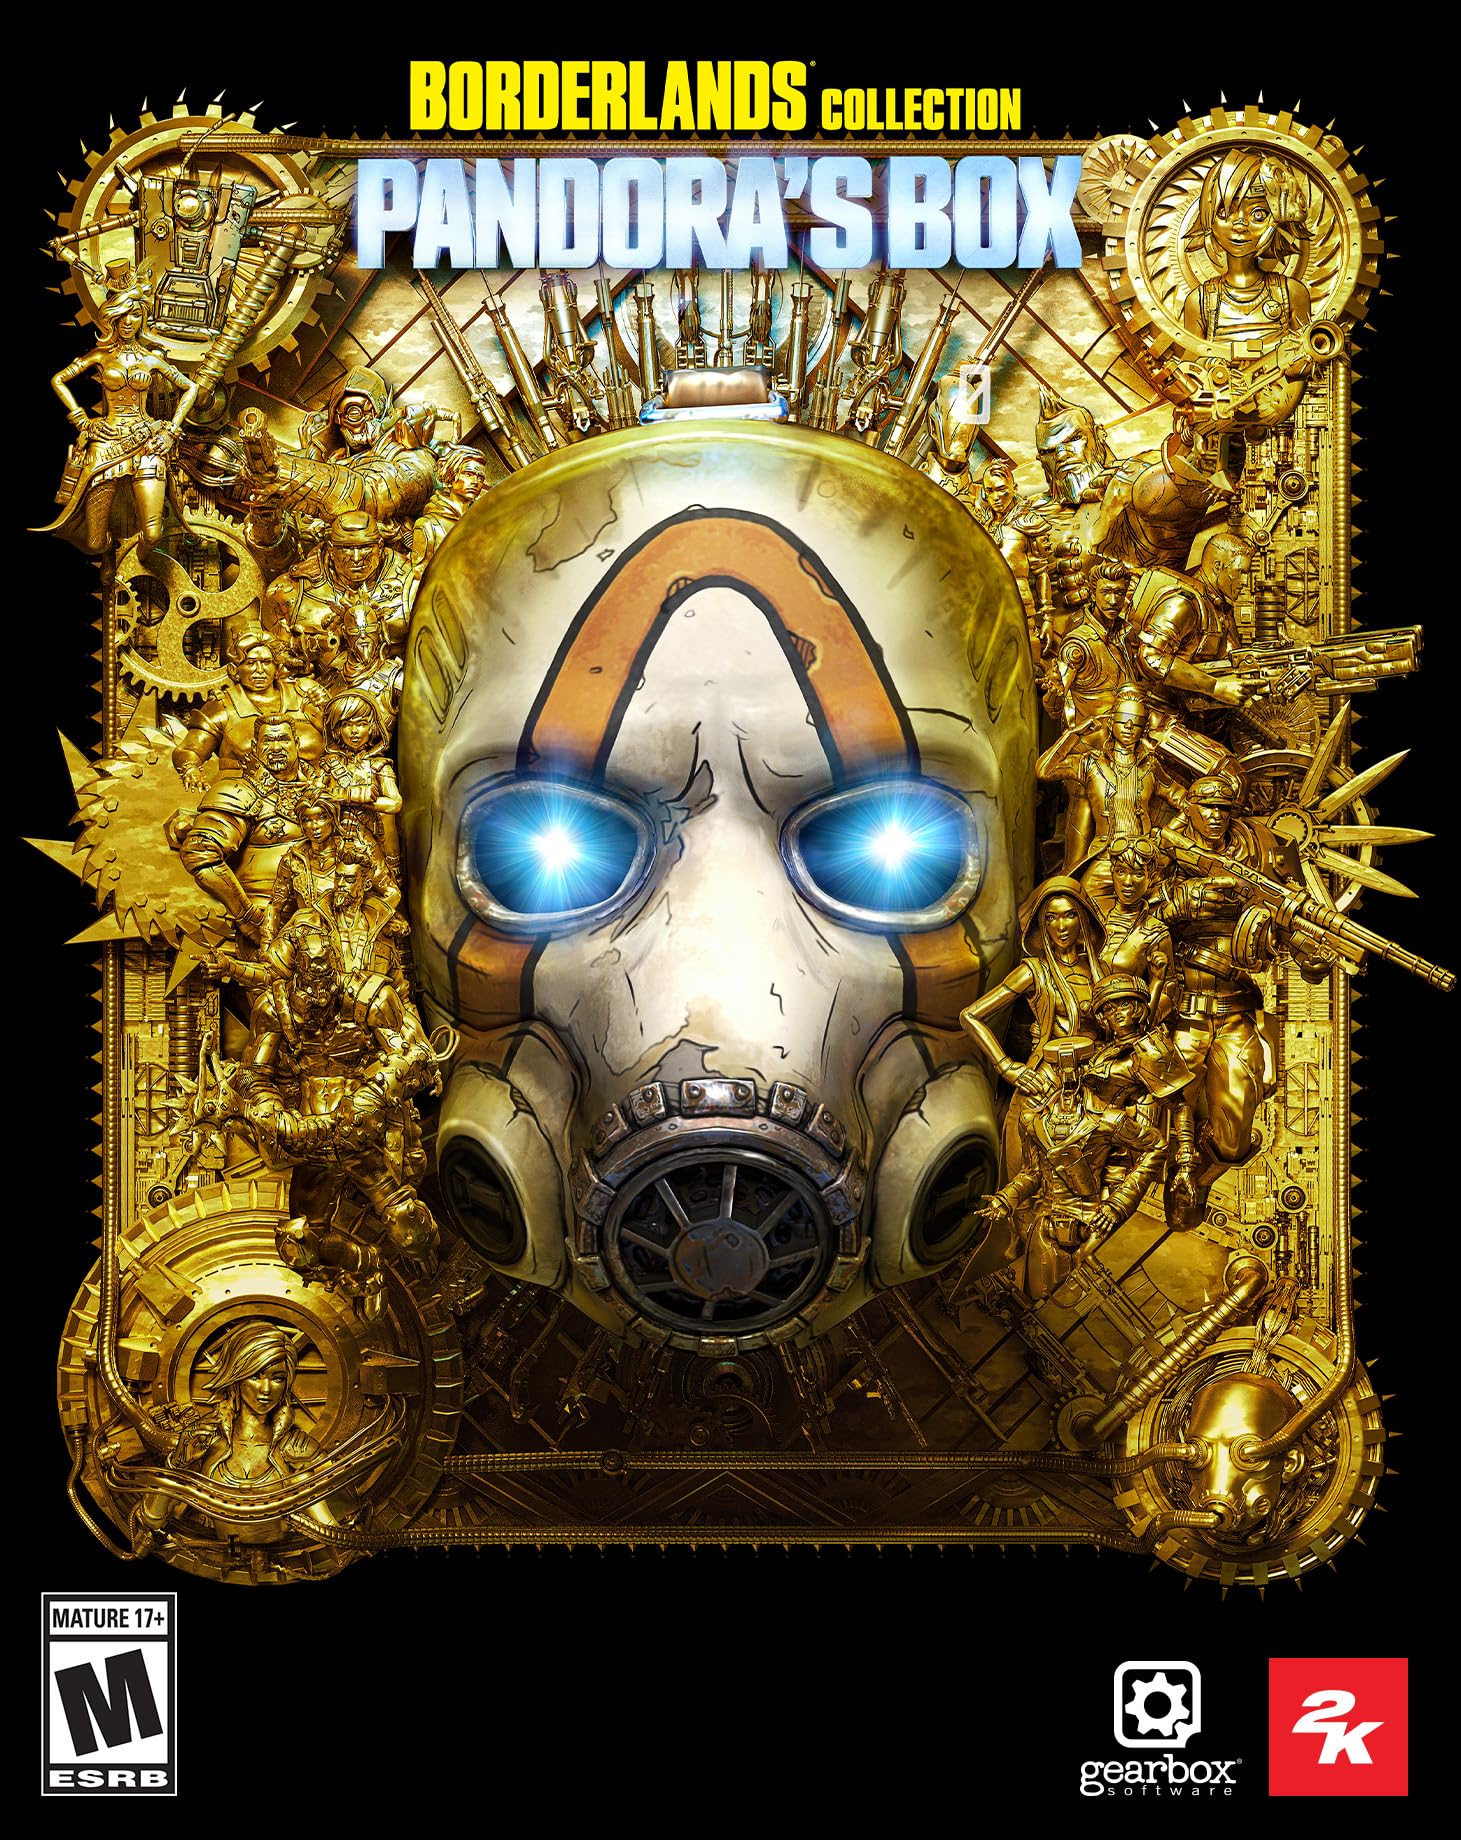 Borderlands Collection: Pandora's Box Standard - PC [Online Game Code]